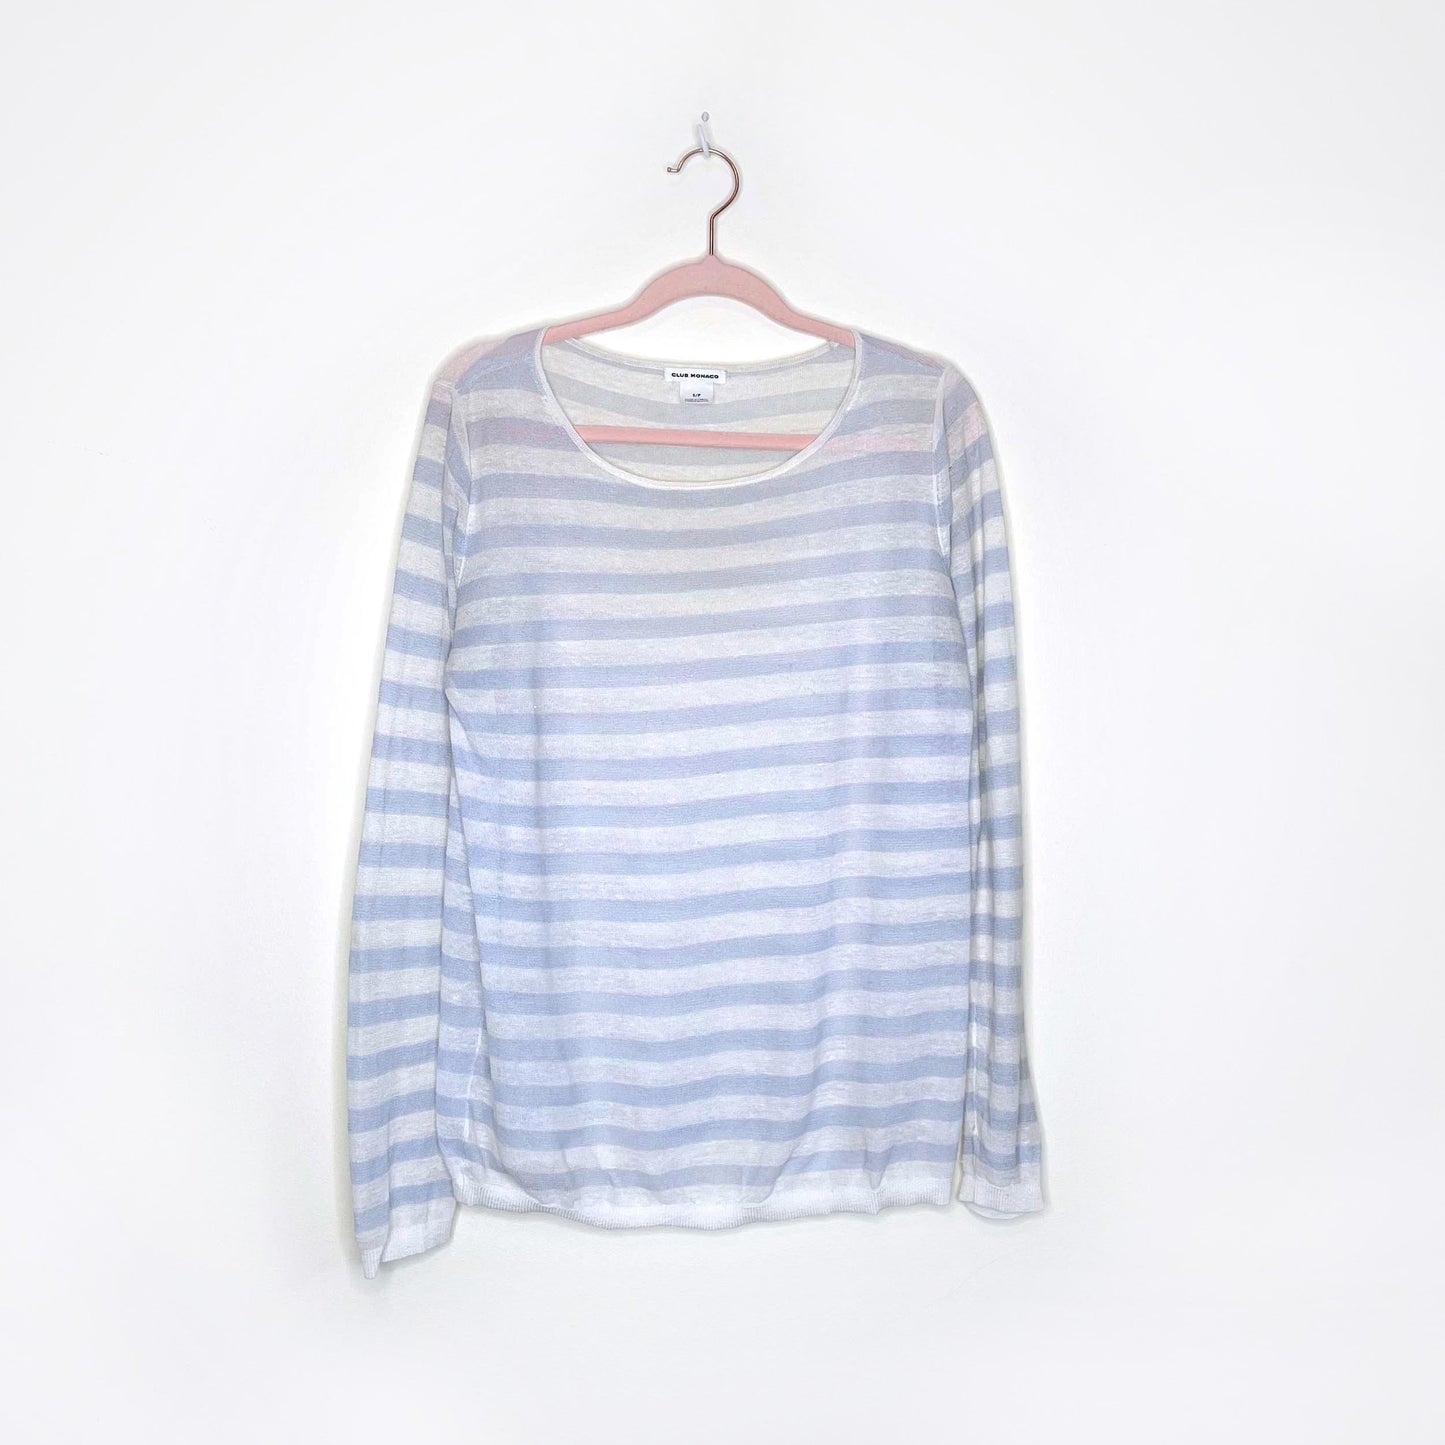 club monaco linen striped lightweight sweater - size small